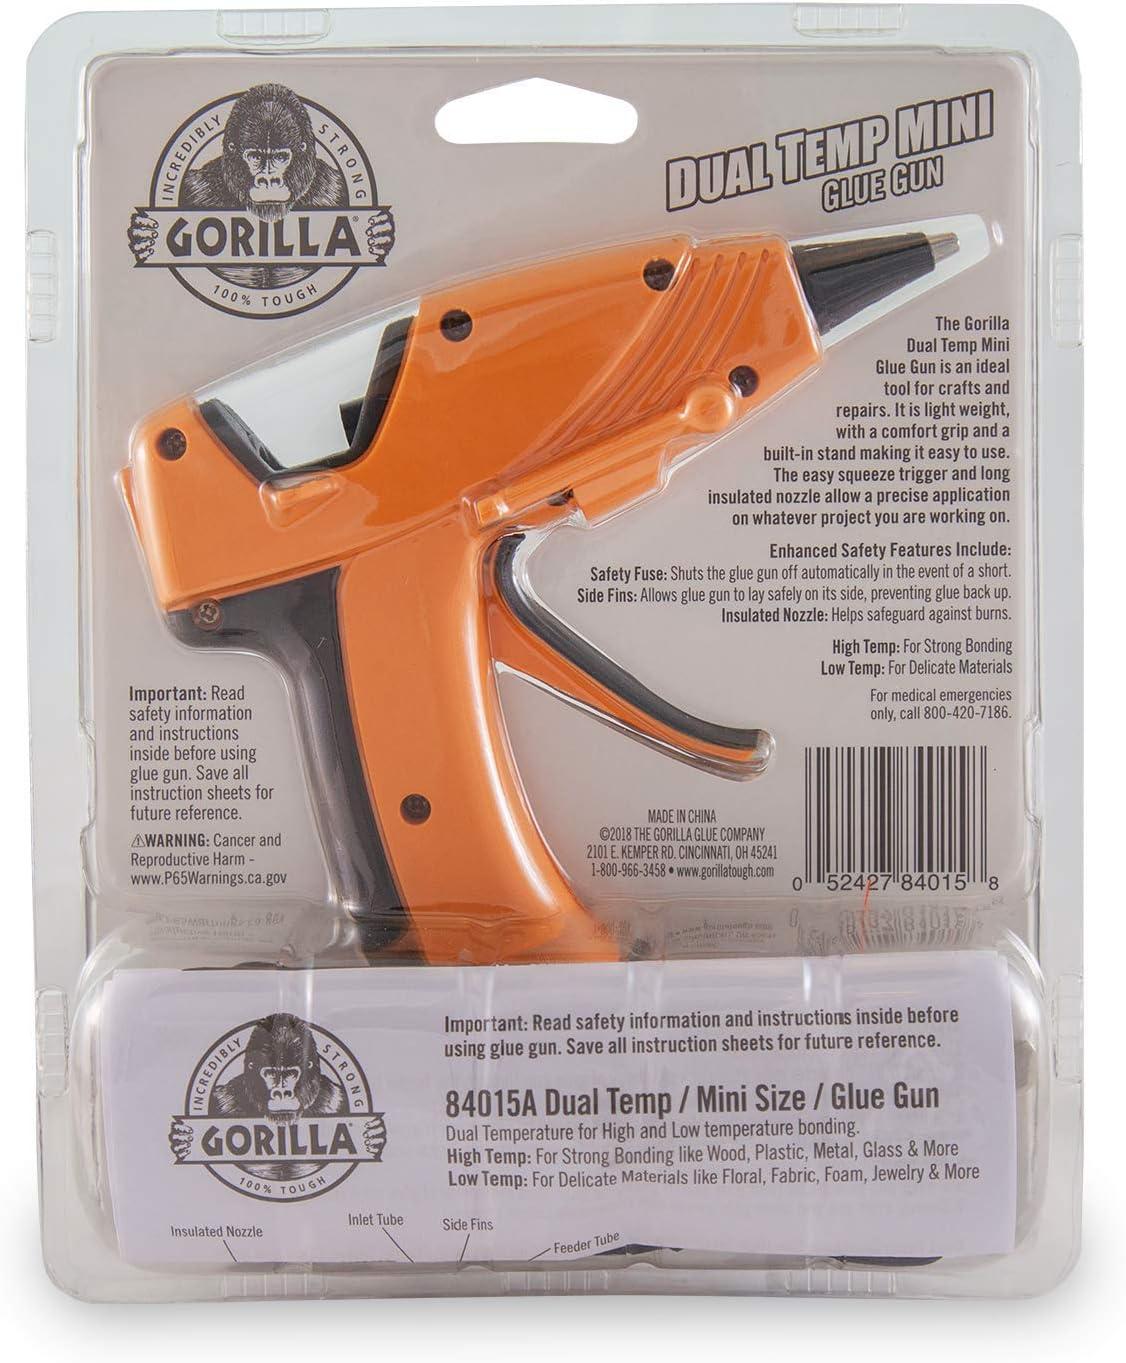 Gorilla Dual Temp Full-Size Hot Glue Gun Kit with 45 45 Sticks, Orange